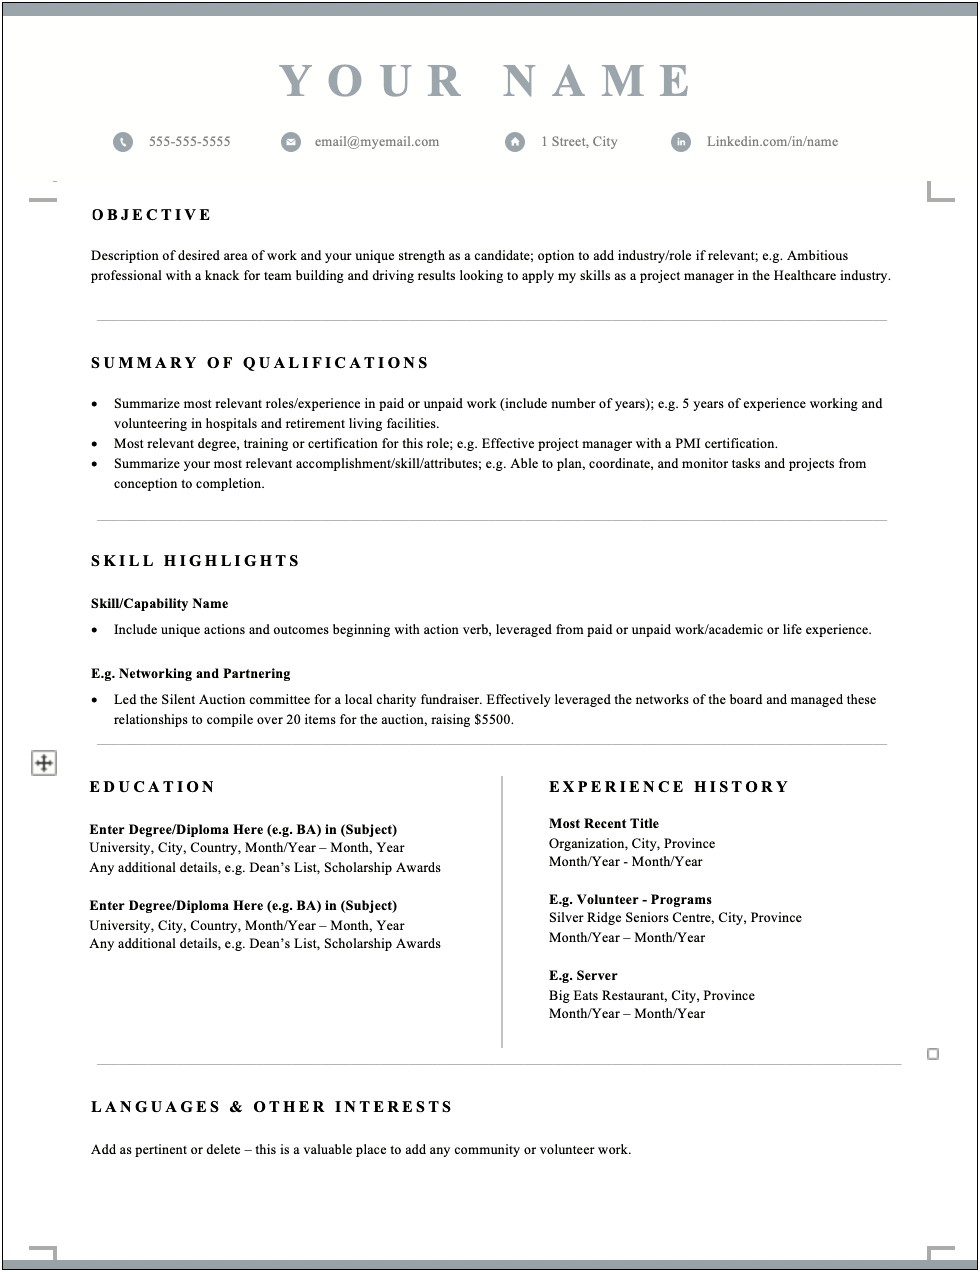 Resume Format For Overseas Job